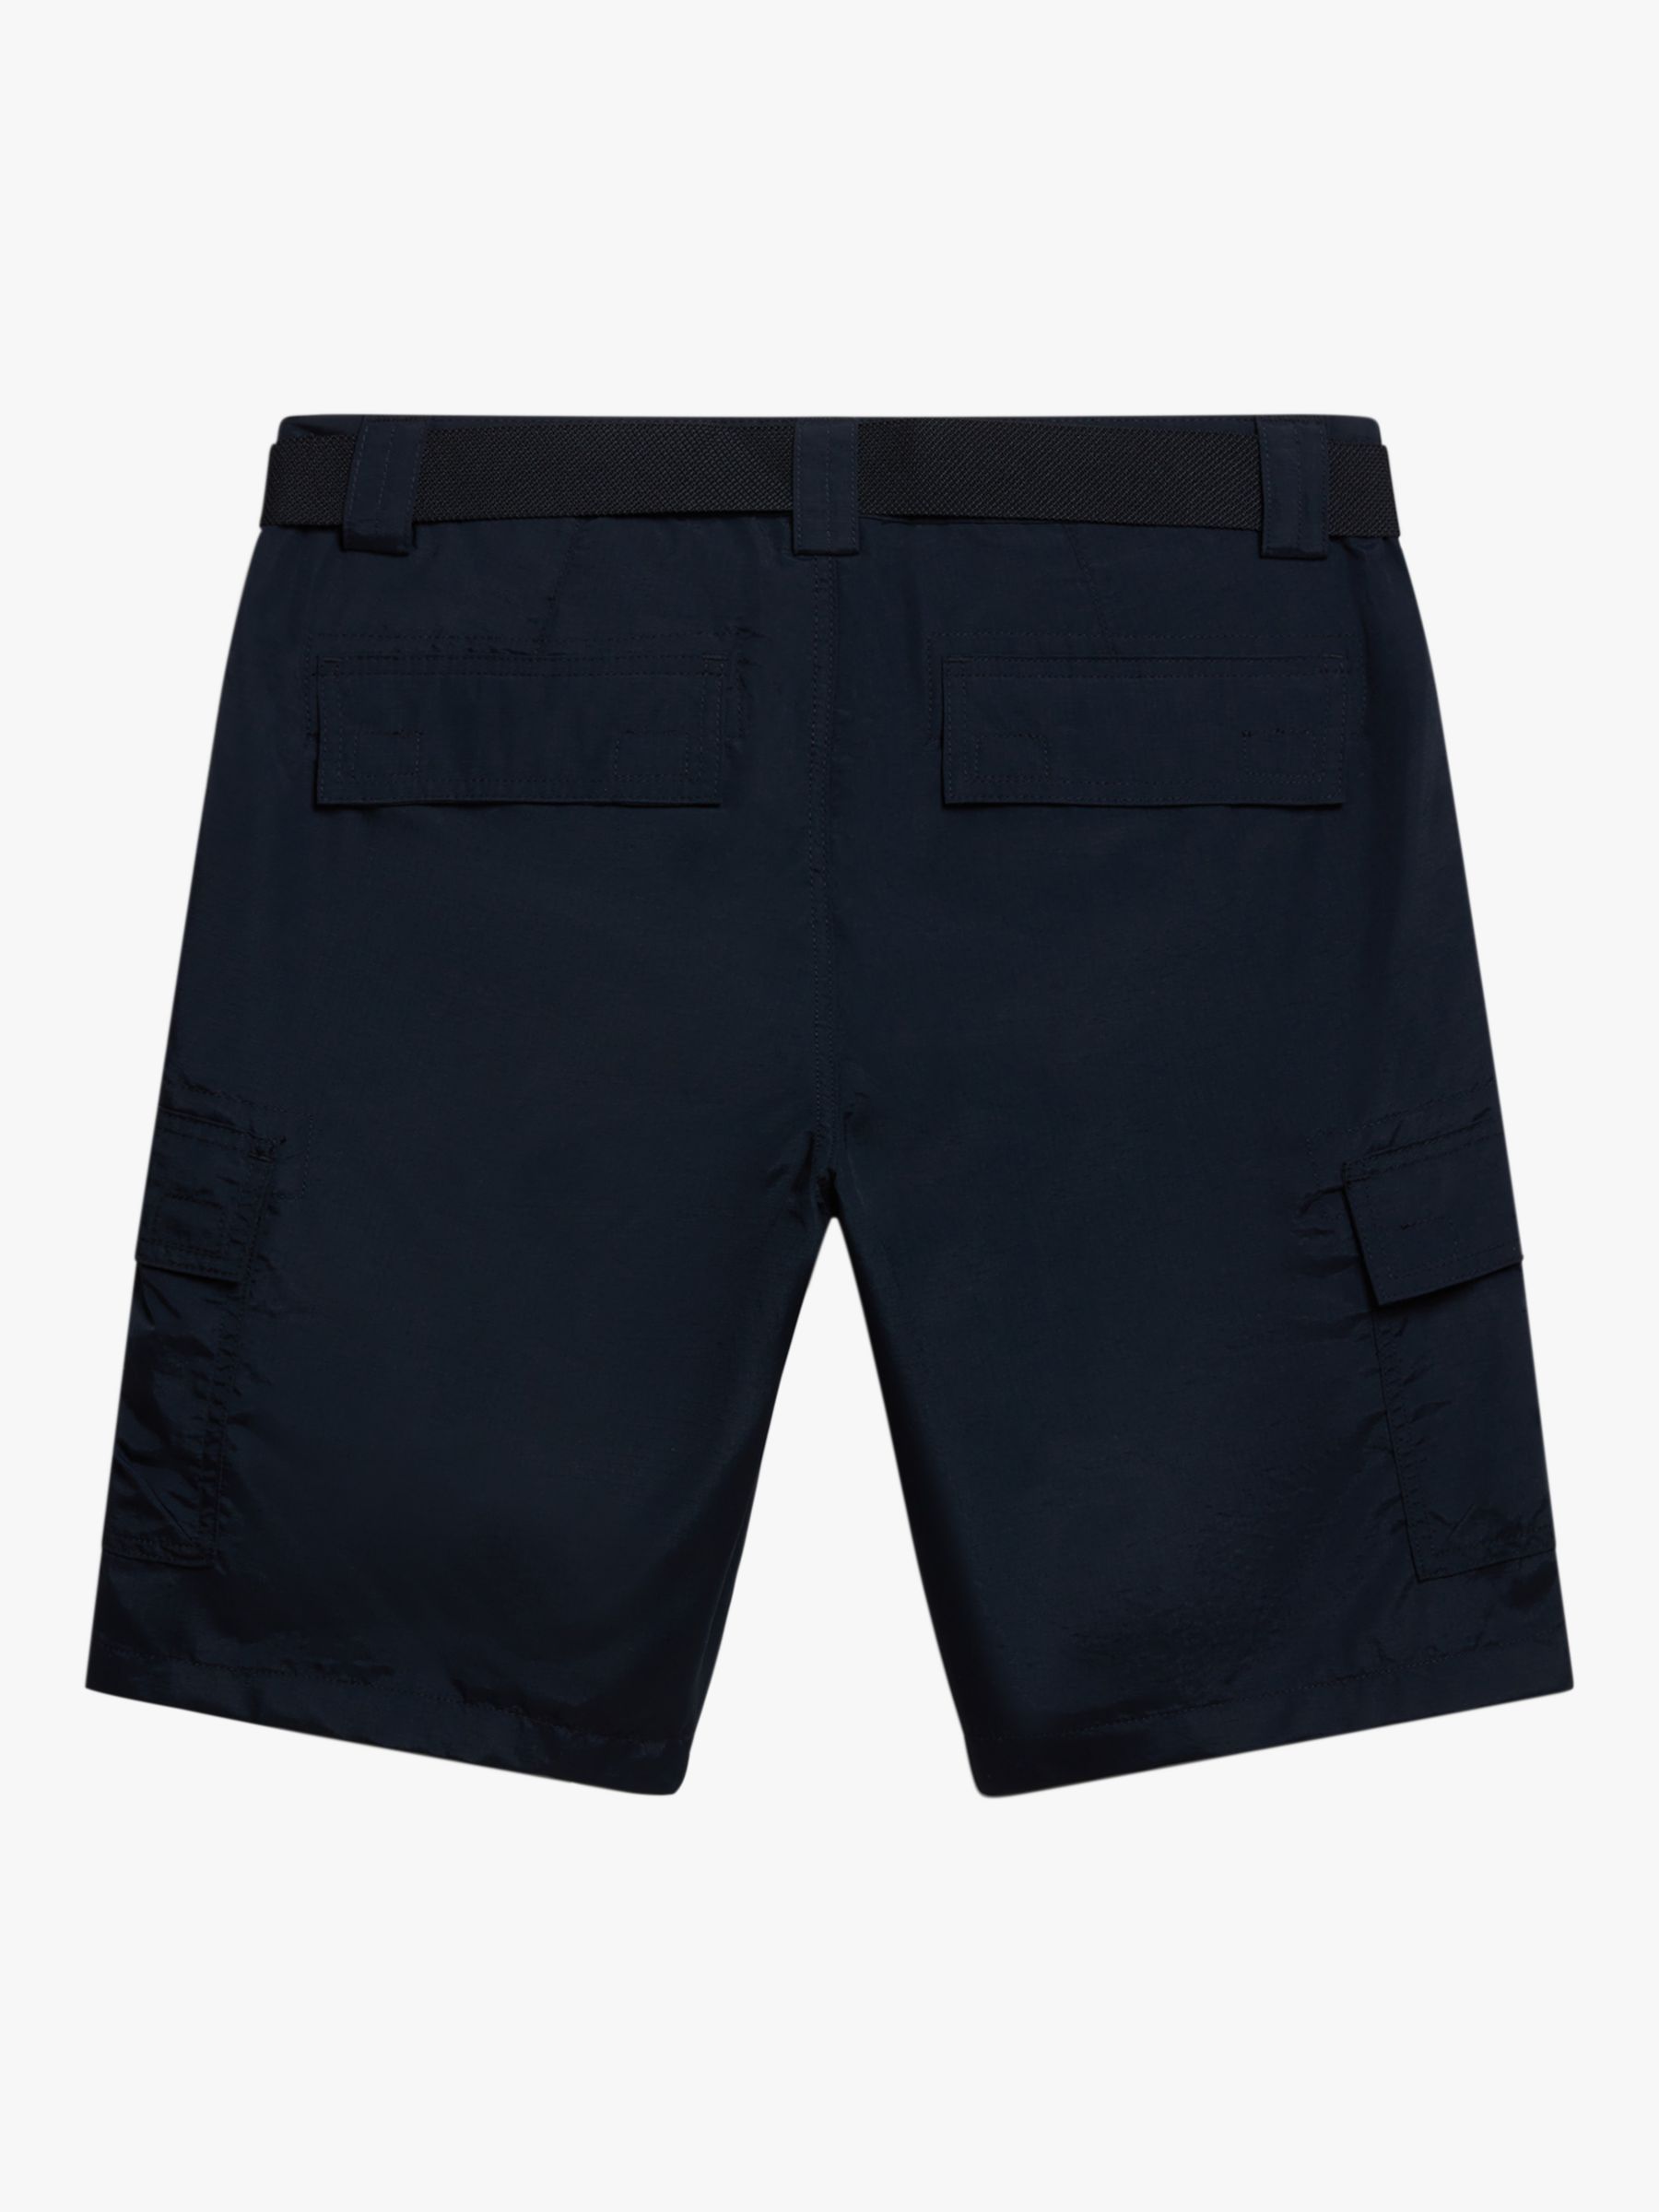 Napapijri Smith Bermuda Cargo Shorts, Black, 34R